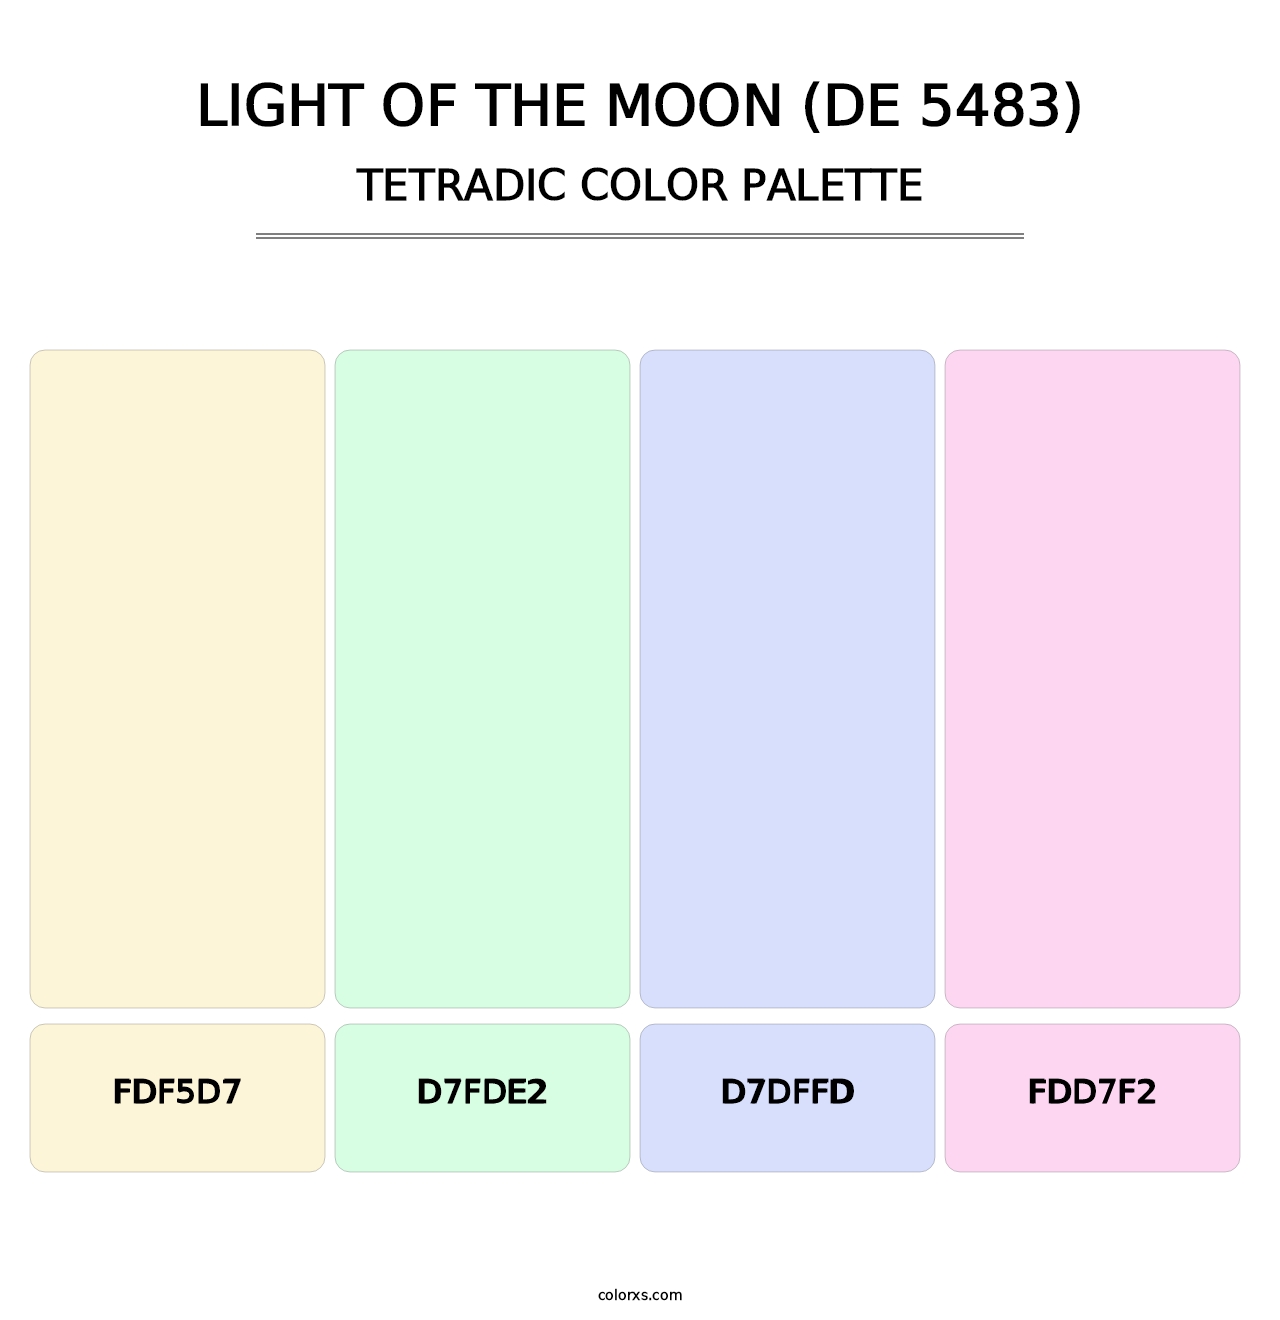 Light of the Moon (DE 5483) - Tetradic Color Palette